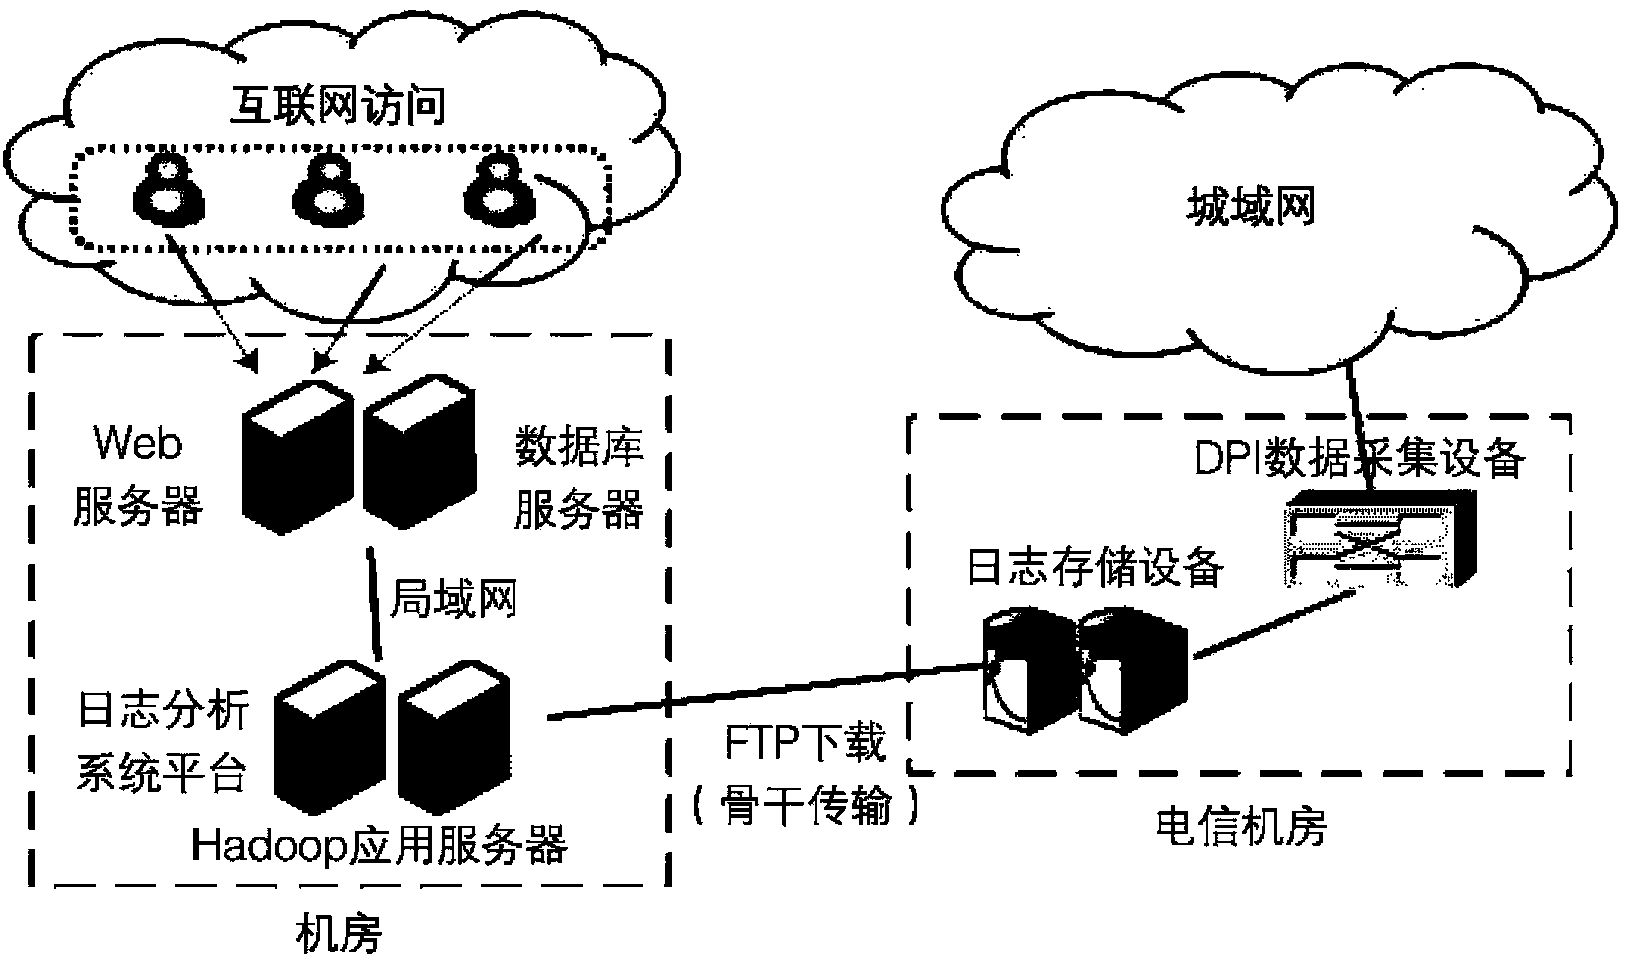 Data analysis system (SRC) based on cloud computing